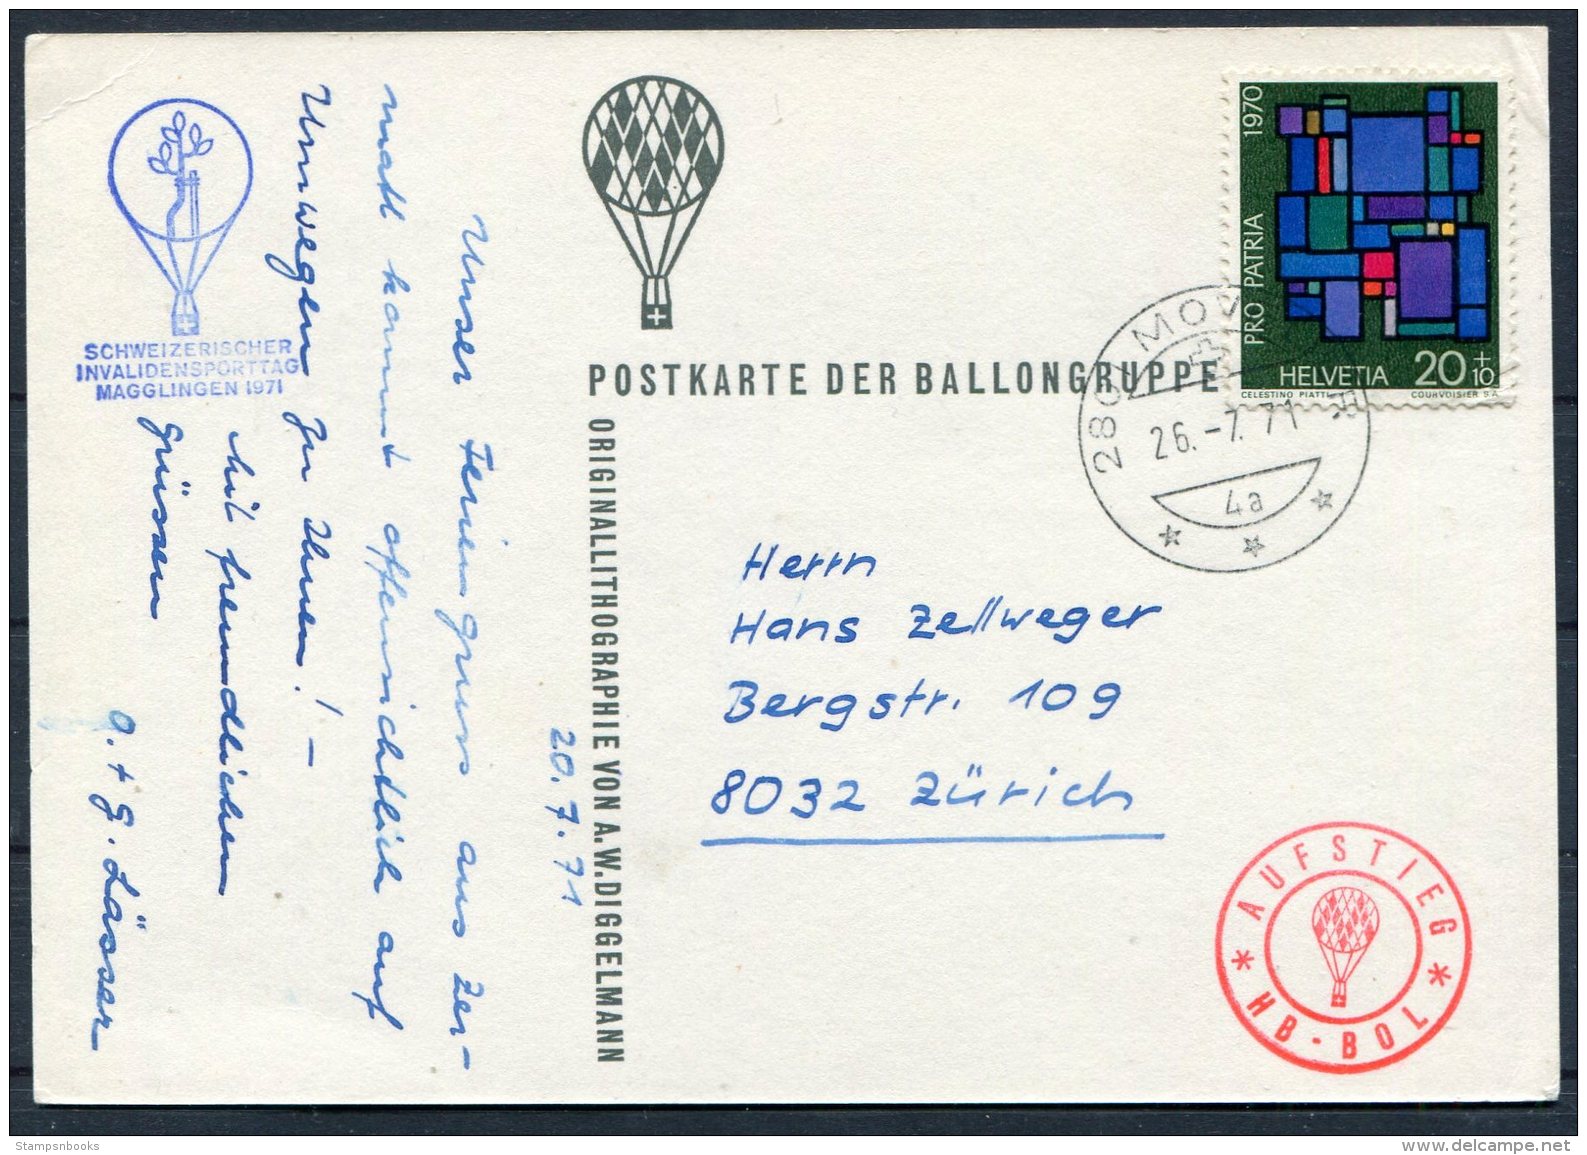 1971 Switzerland Ballonflug Balloon Flight Postcard. Swiss Disabled Sports Magglingen - Covers & Documents